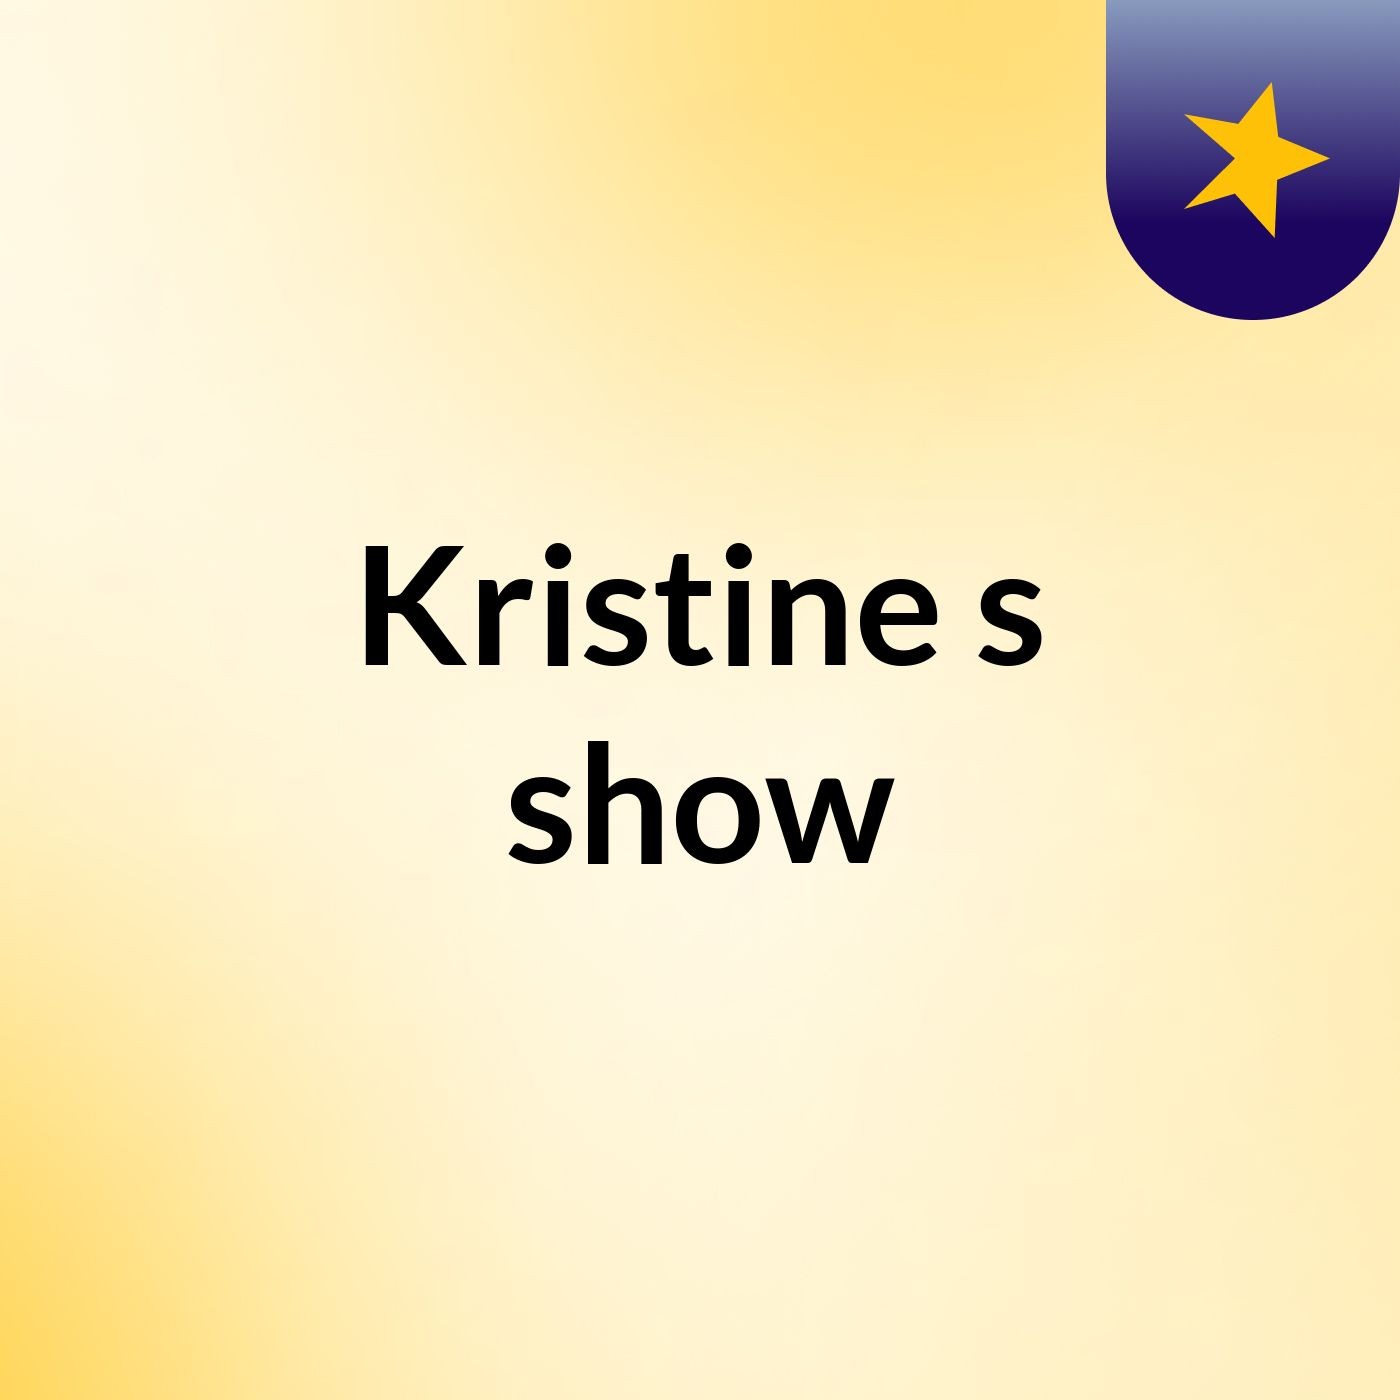 Kristine's show